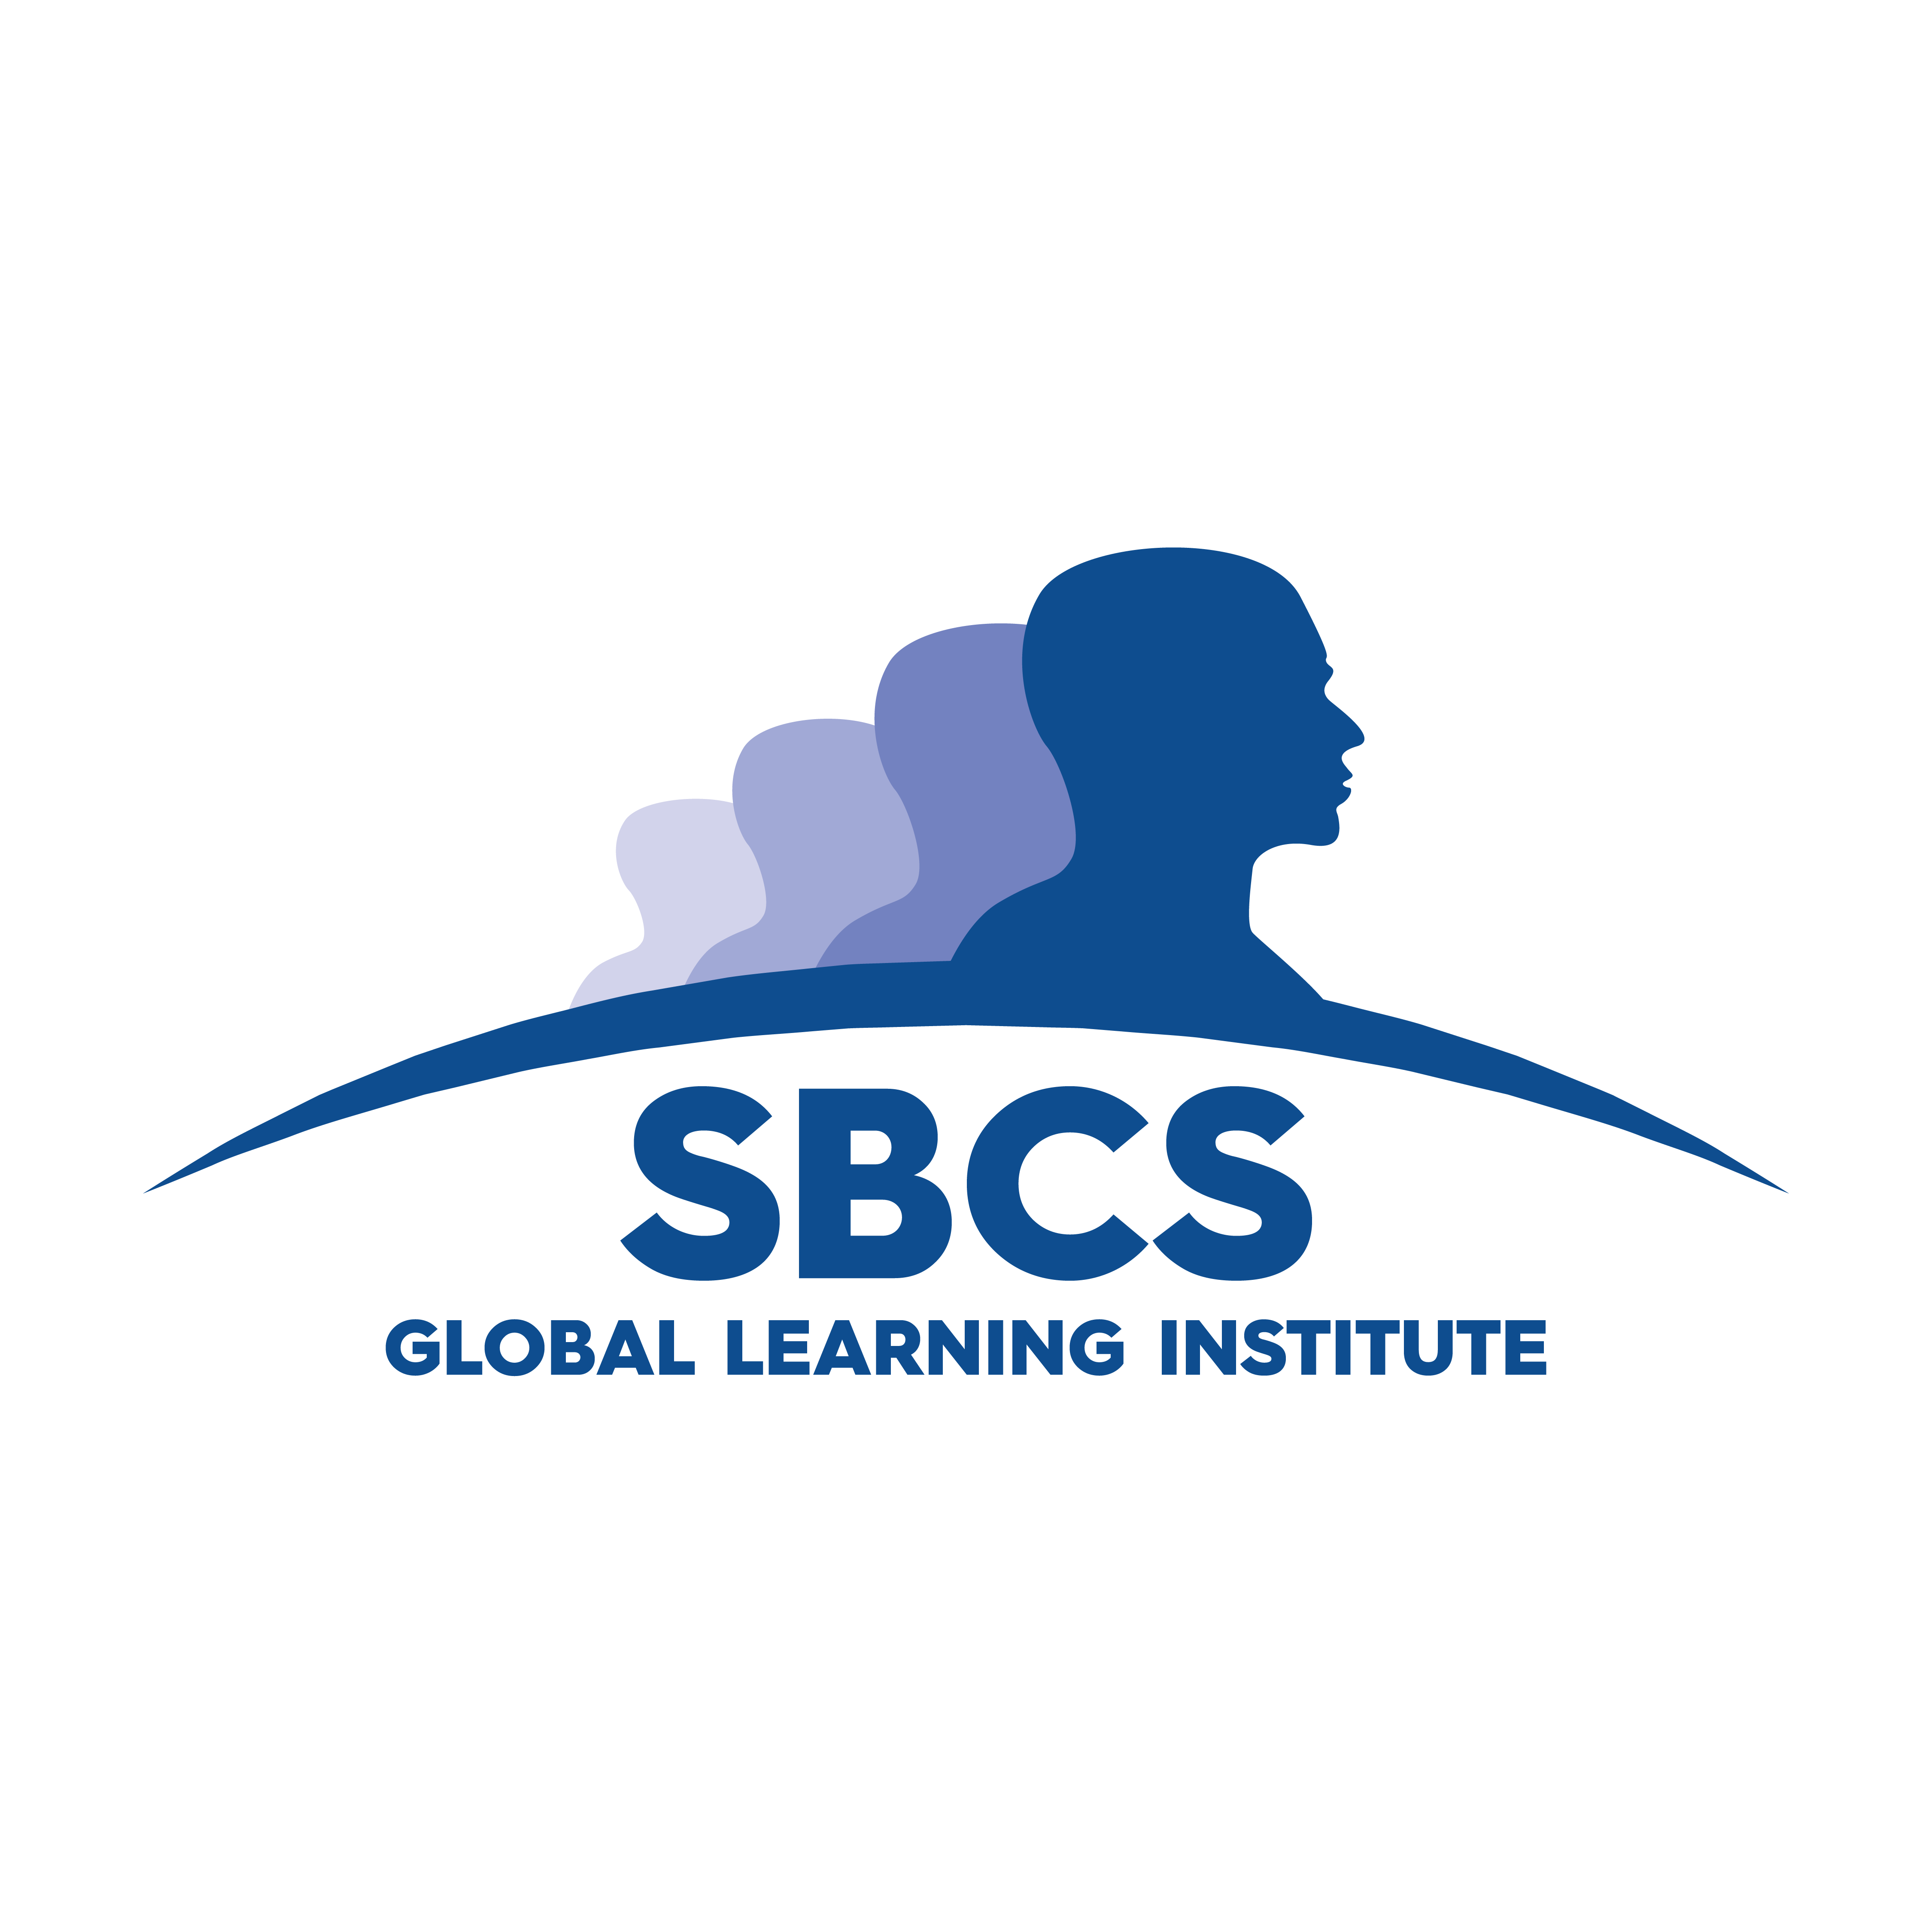 SBCS - Global Learning Institute